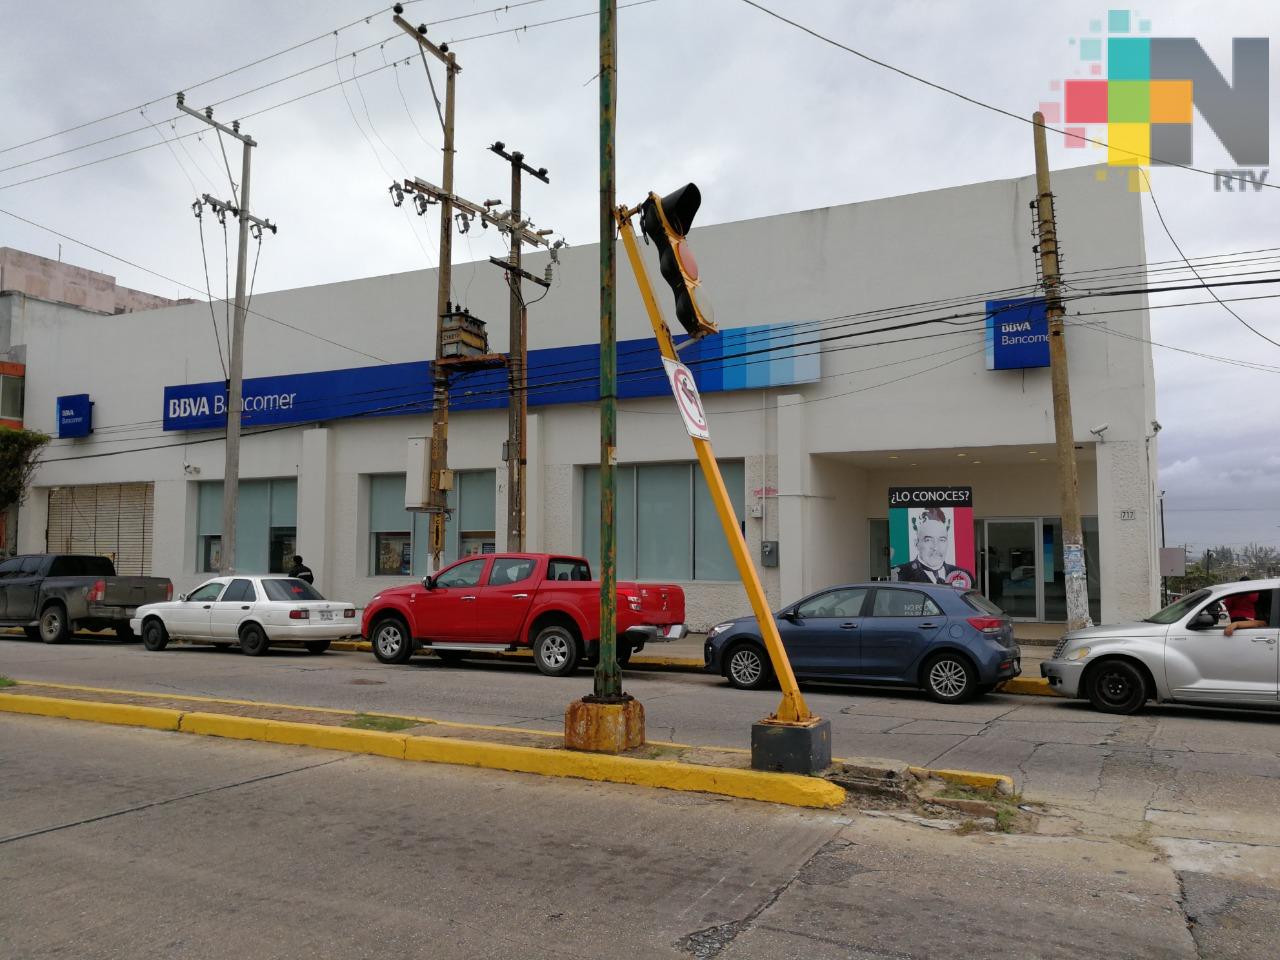 Fuertes vientos dañan estructuras de semáforos en municipio de Veracruz